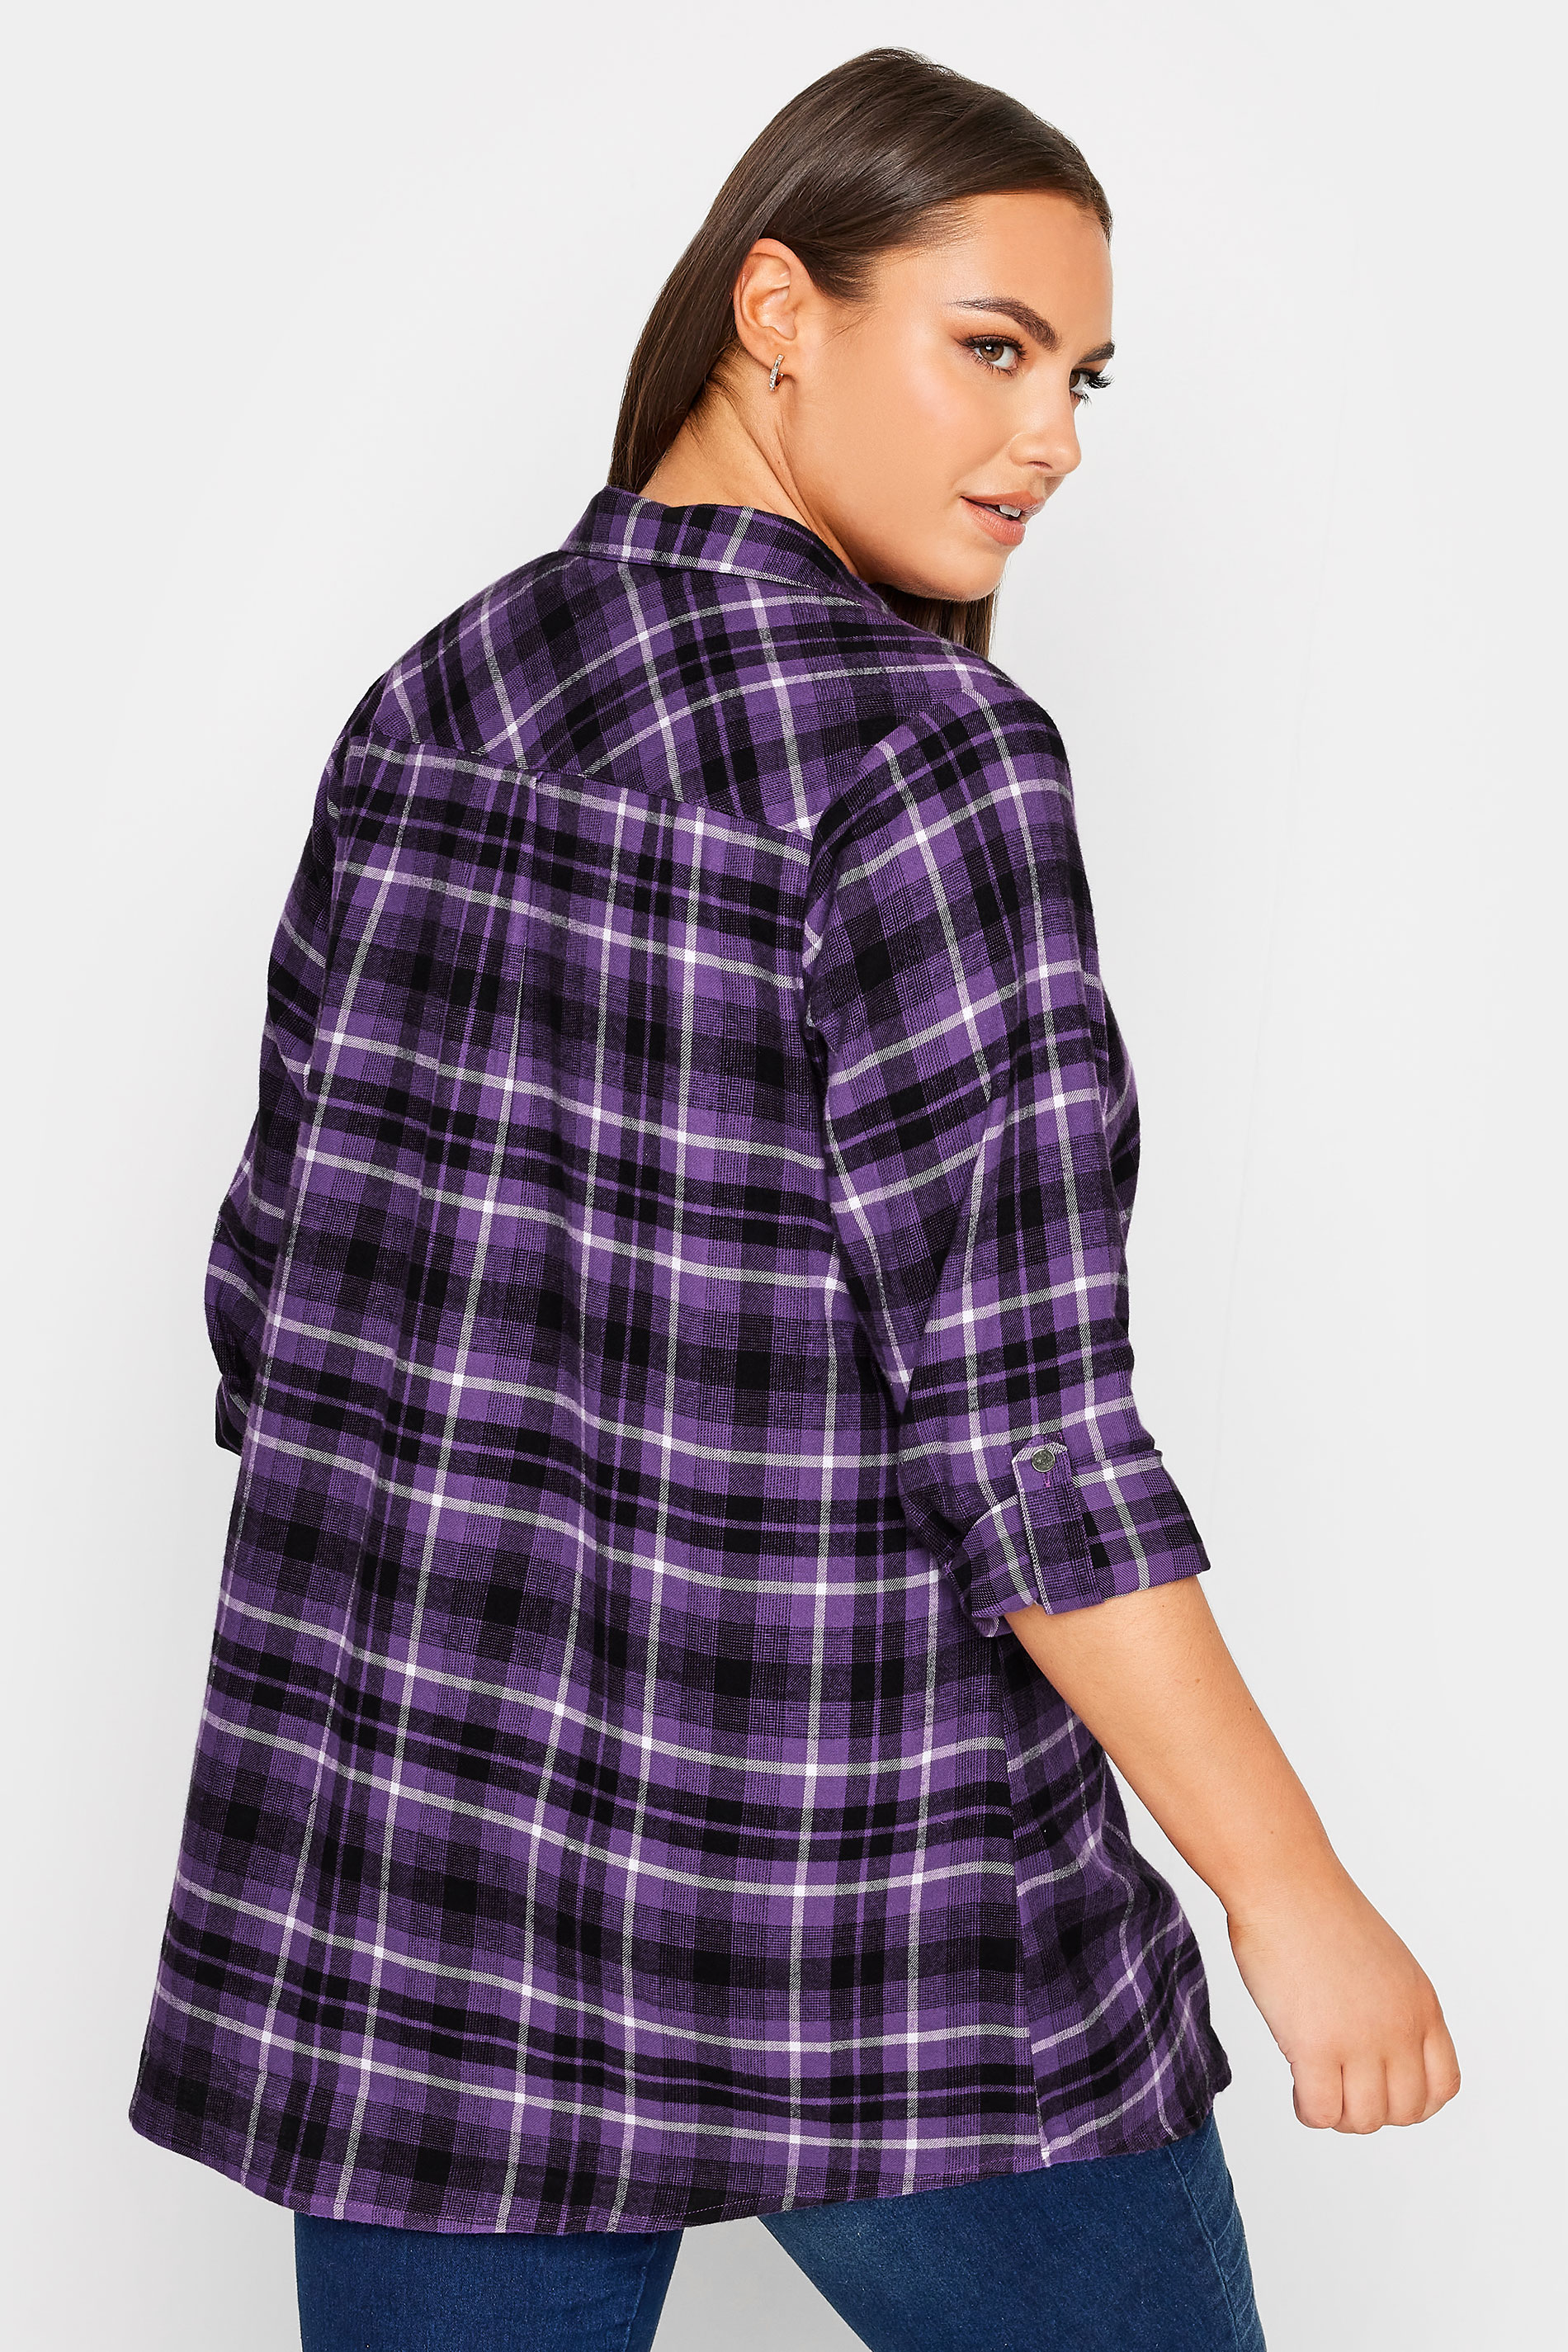 YOURS Plus Size Dark Purple Check Print Boyfriend Shirt | Yours Clothing 3